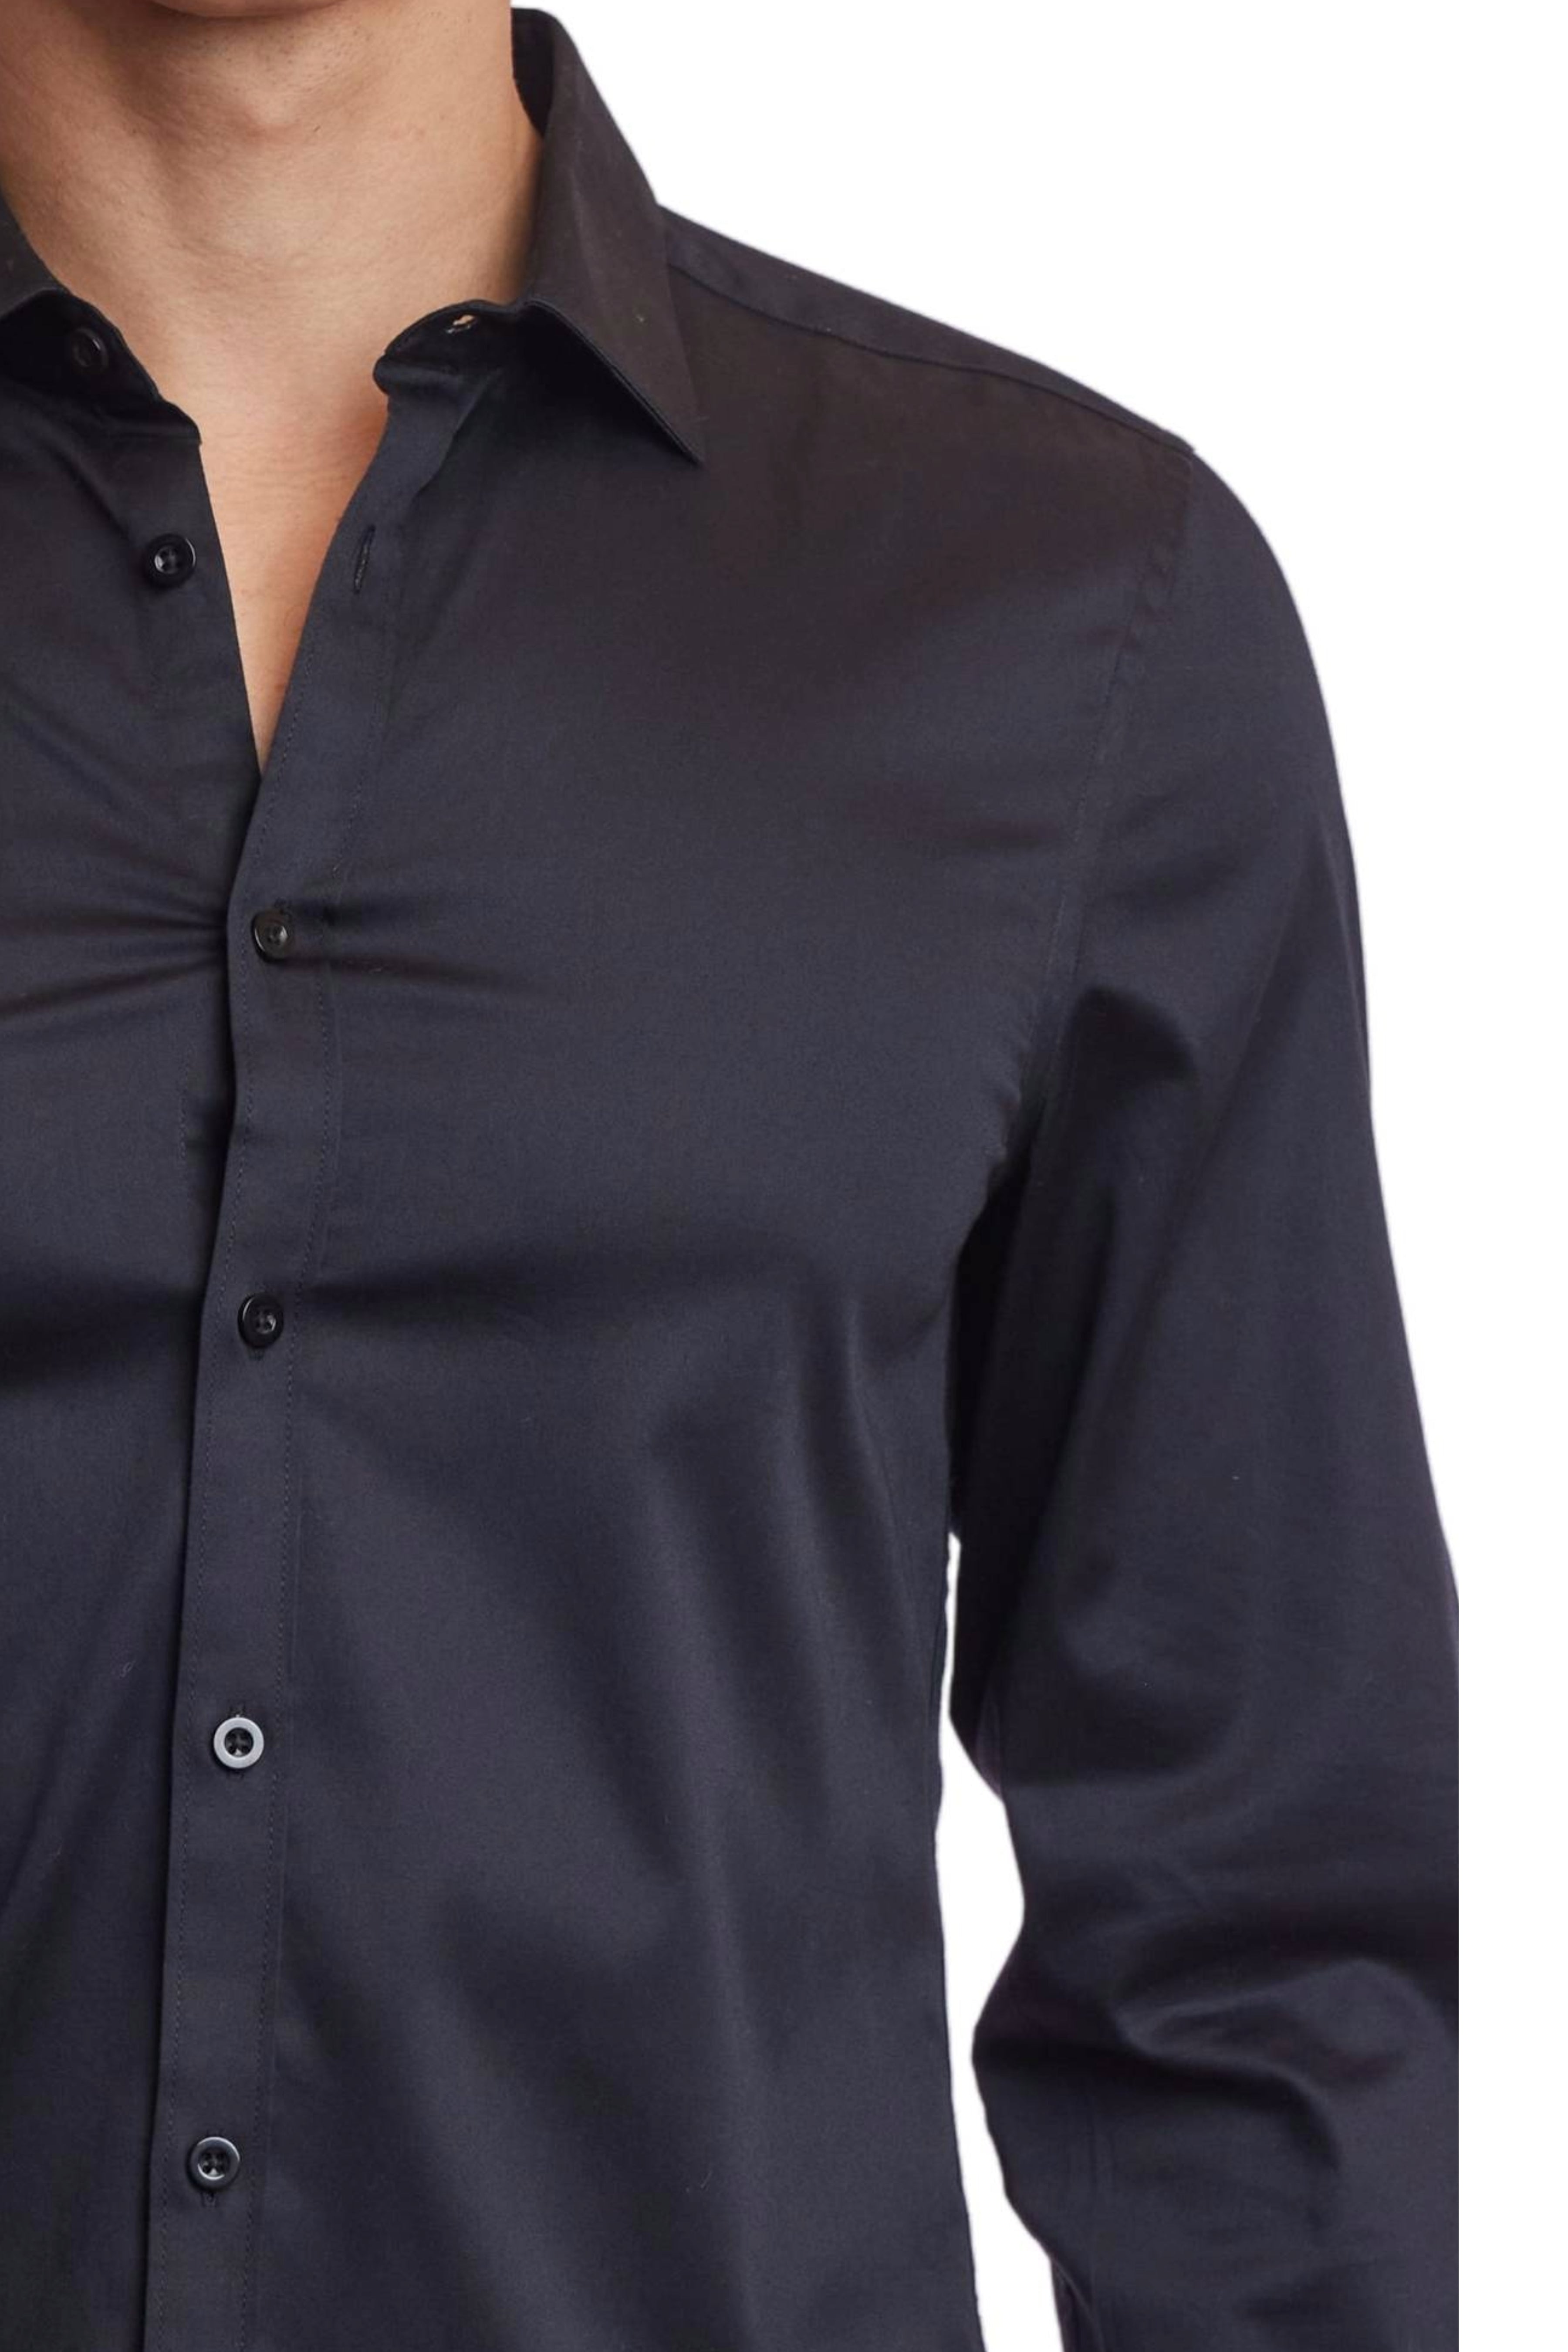 Samuel Spread Collar Shirt - Coal Black